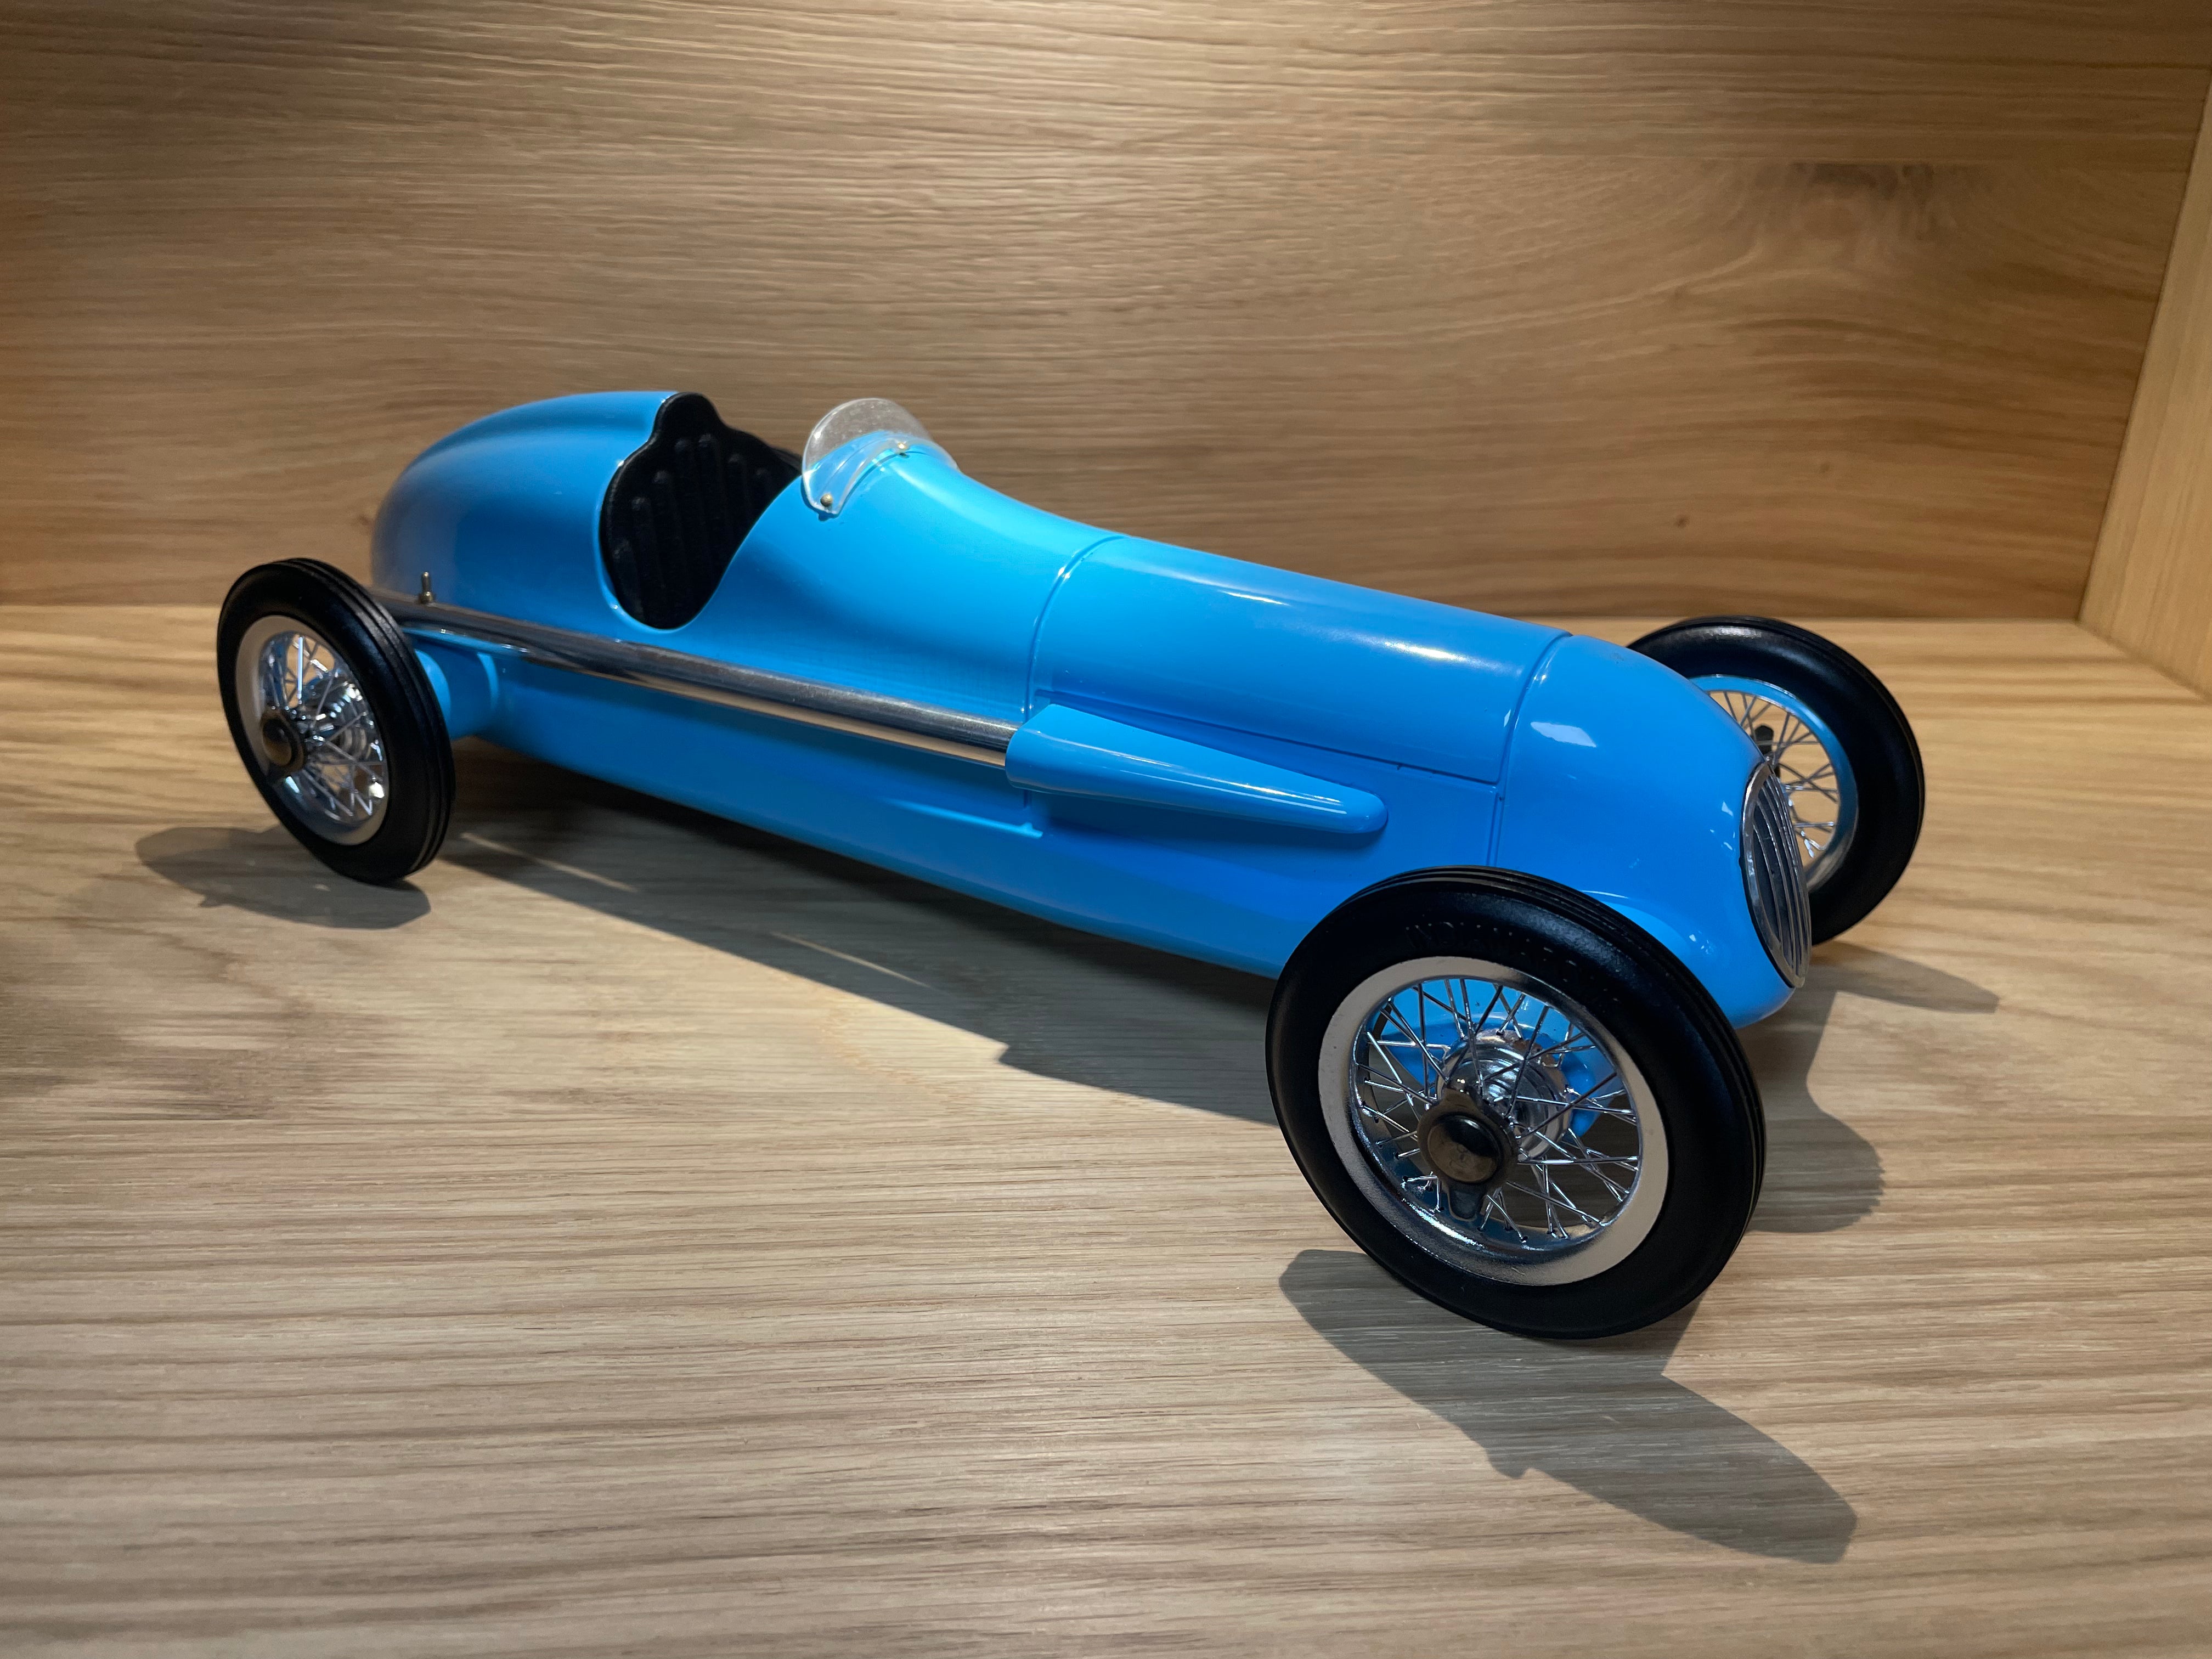 Blue Racer Car